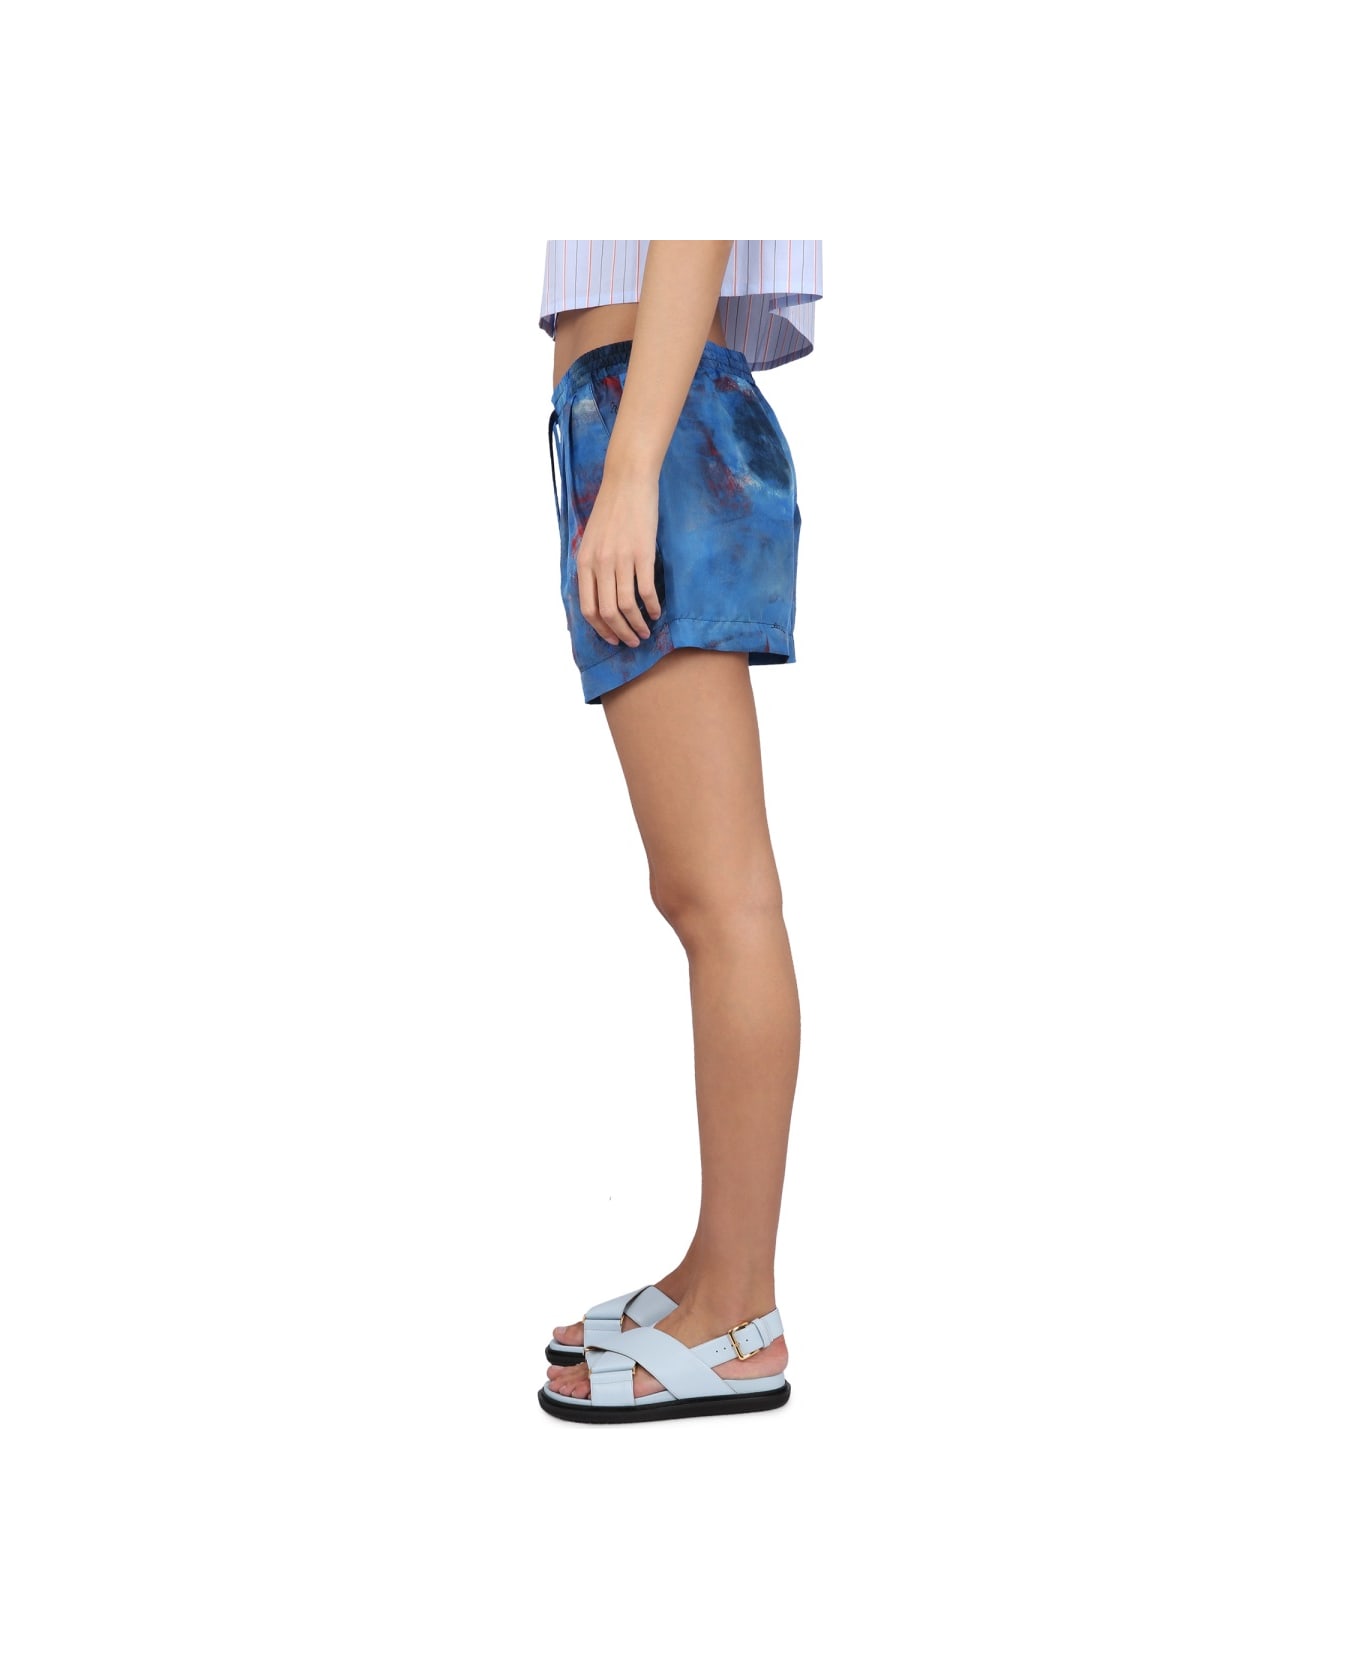 Marni Shorts With Blue Hole Print - Blu